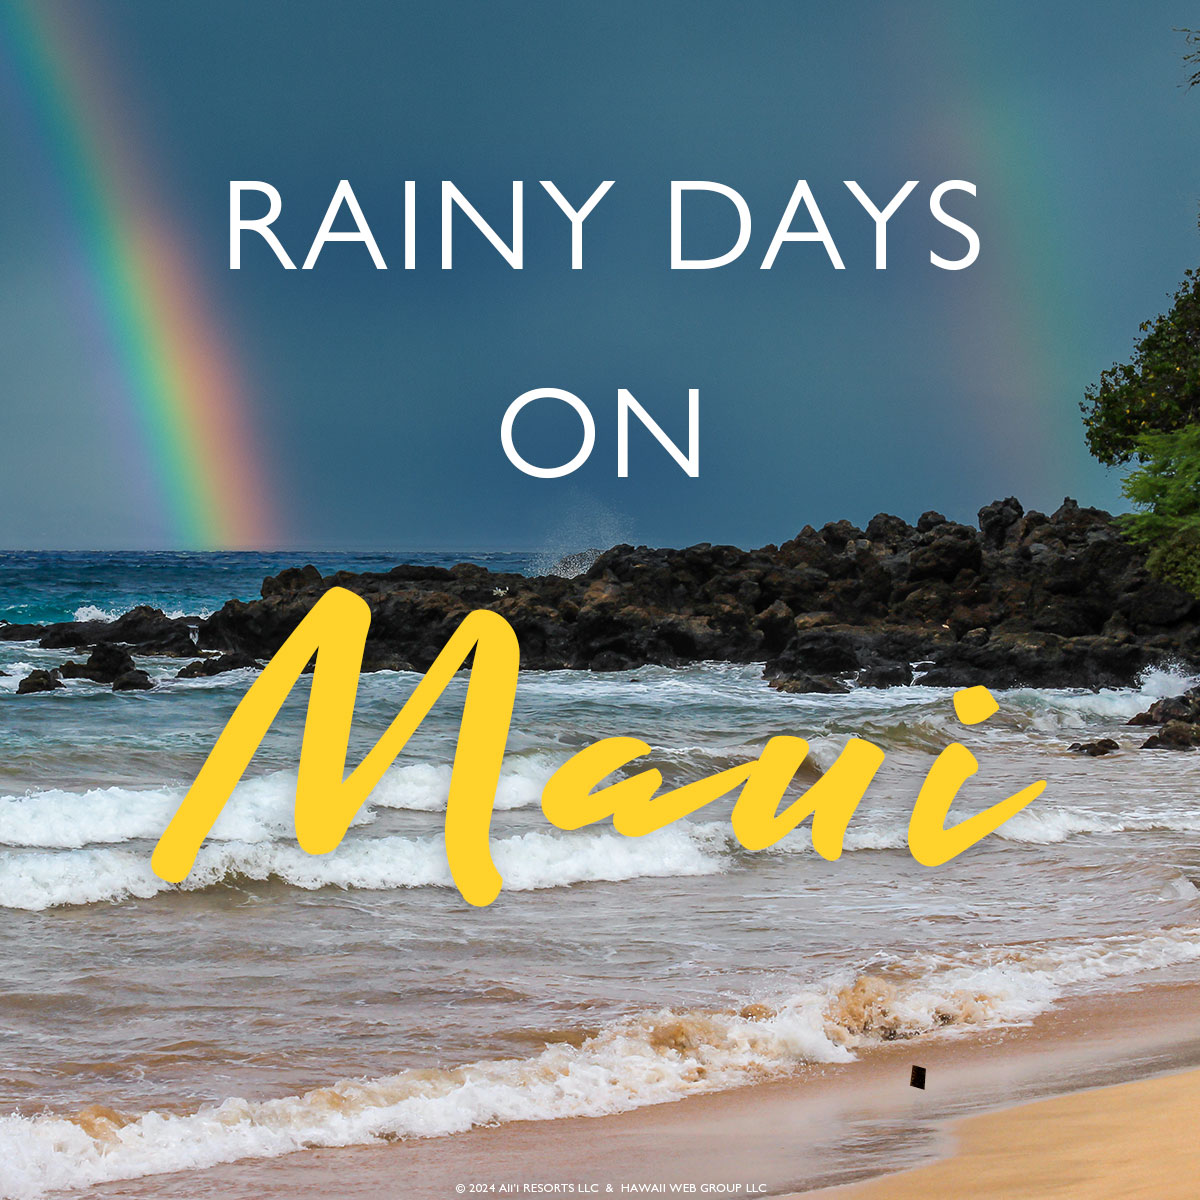 Rainy Days on Maui